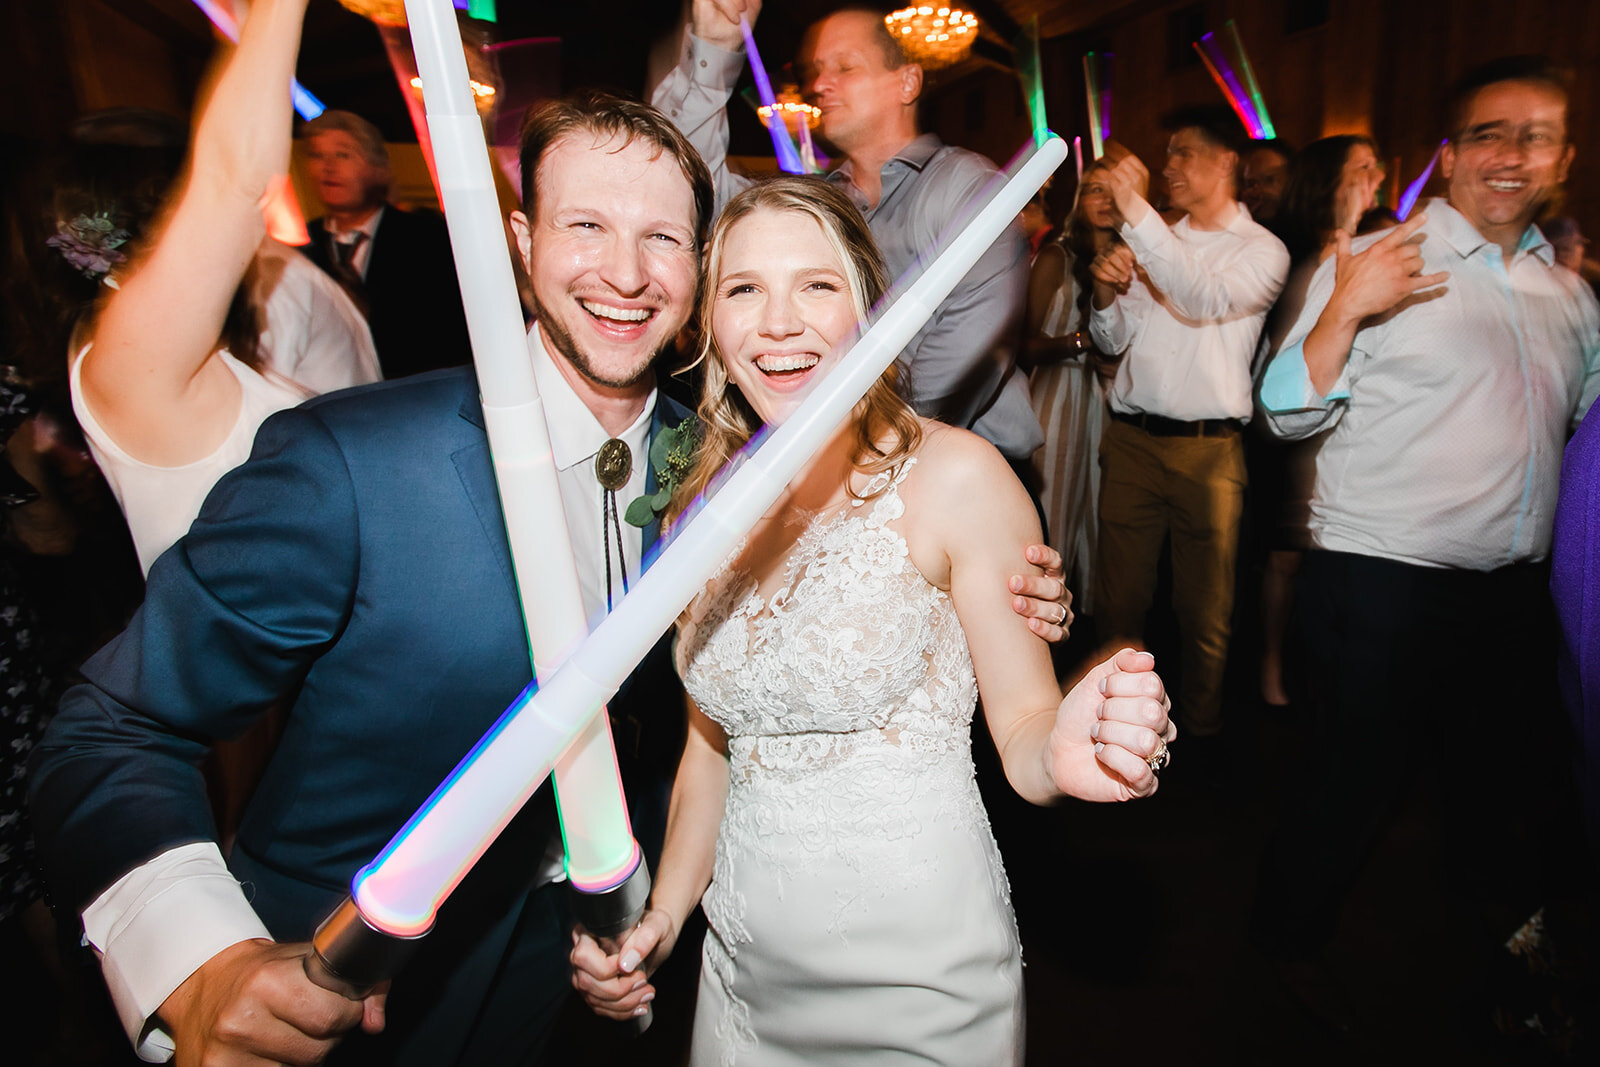  bride and groom with light saber lights 